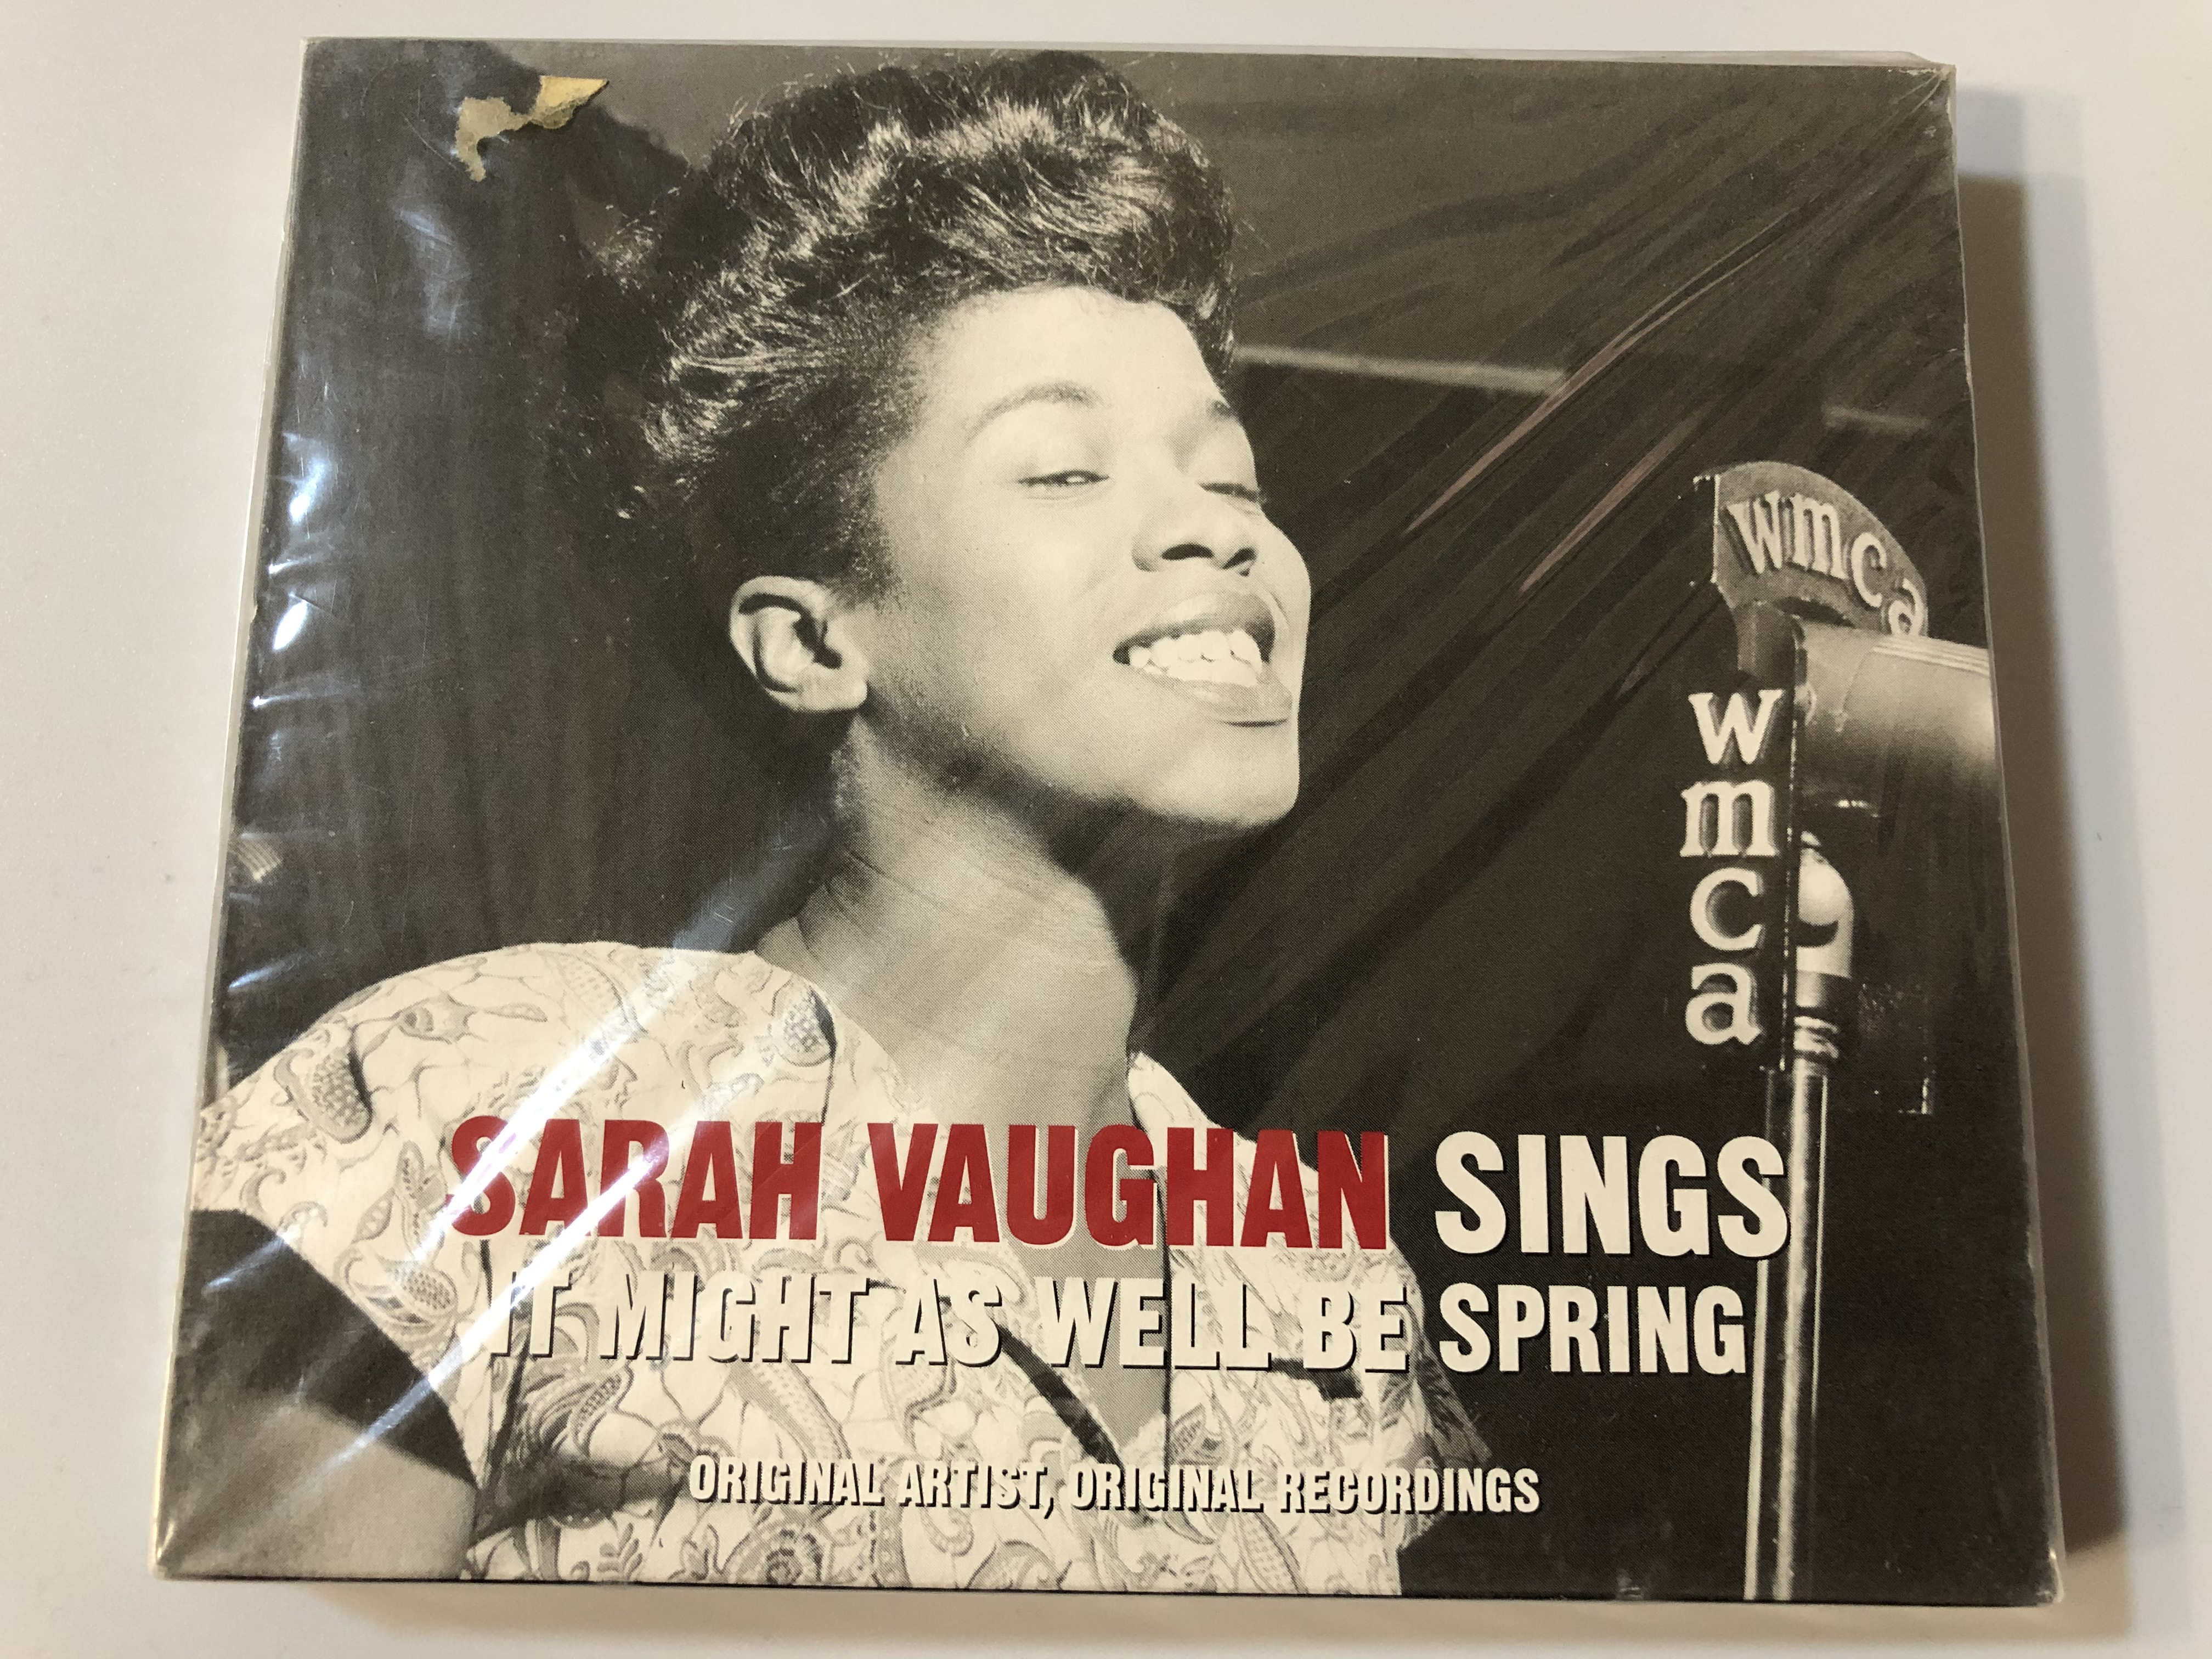 sarah-vaughan-sings-it-might-as-well-be-spring-original-artist-original-recordings-disky-audio-cd-si-903630-1-.jpg